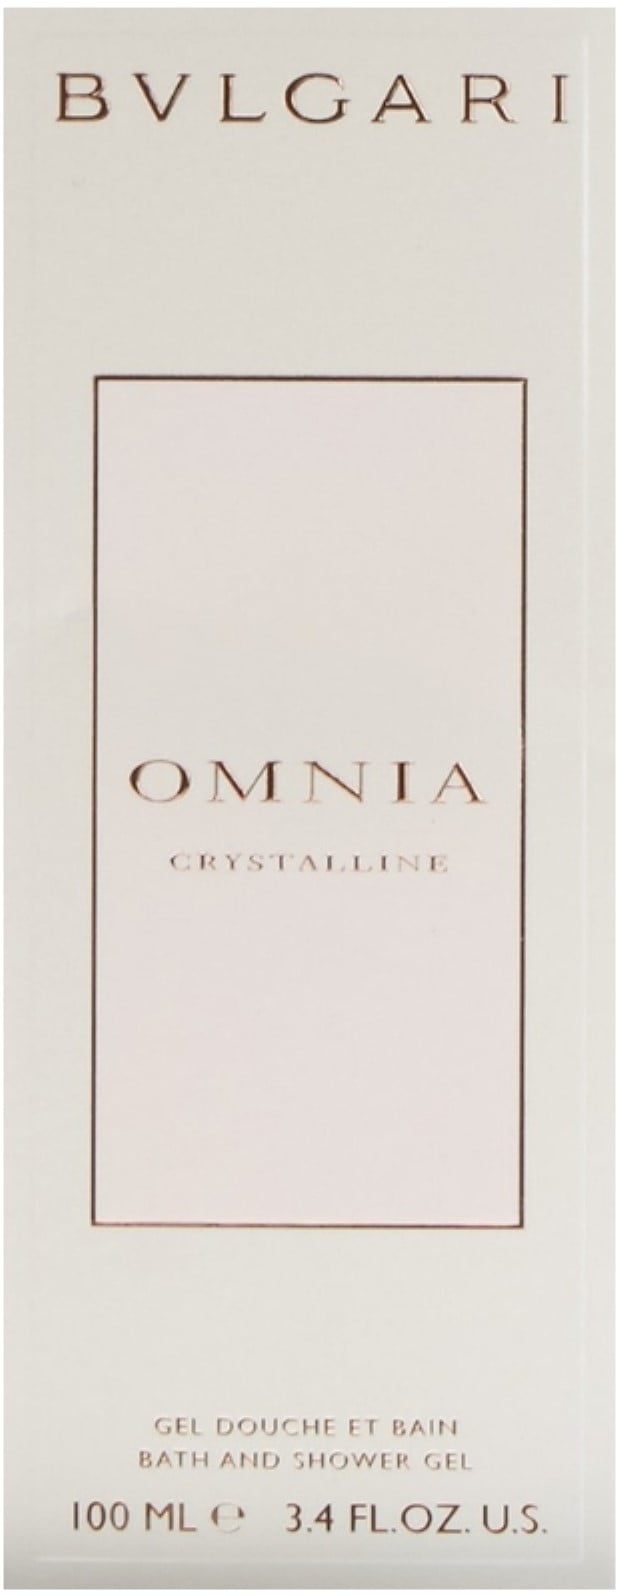 bvlgari omnia crystalline shower gel